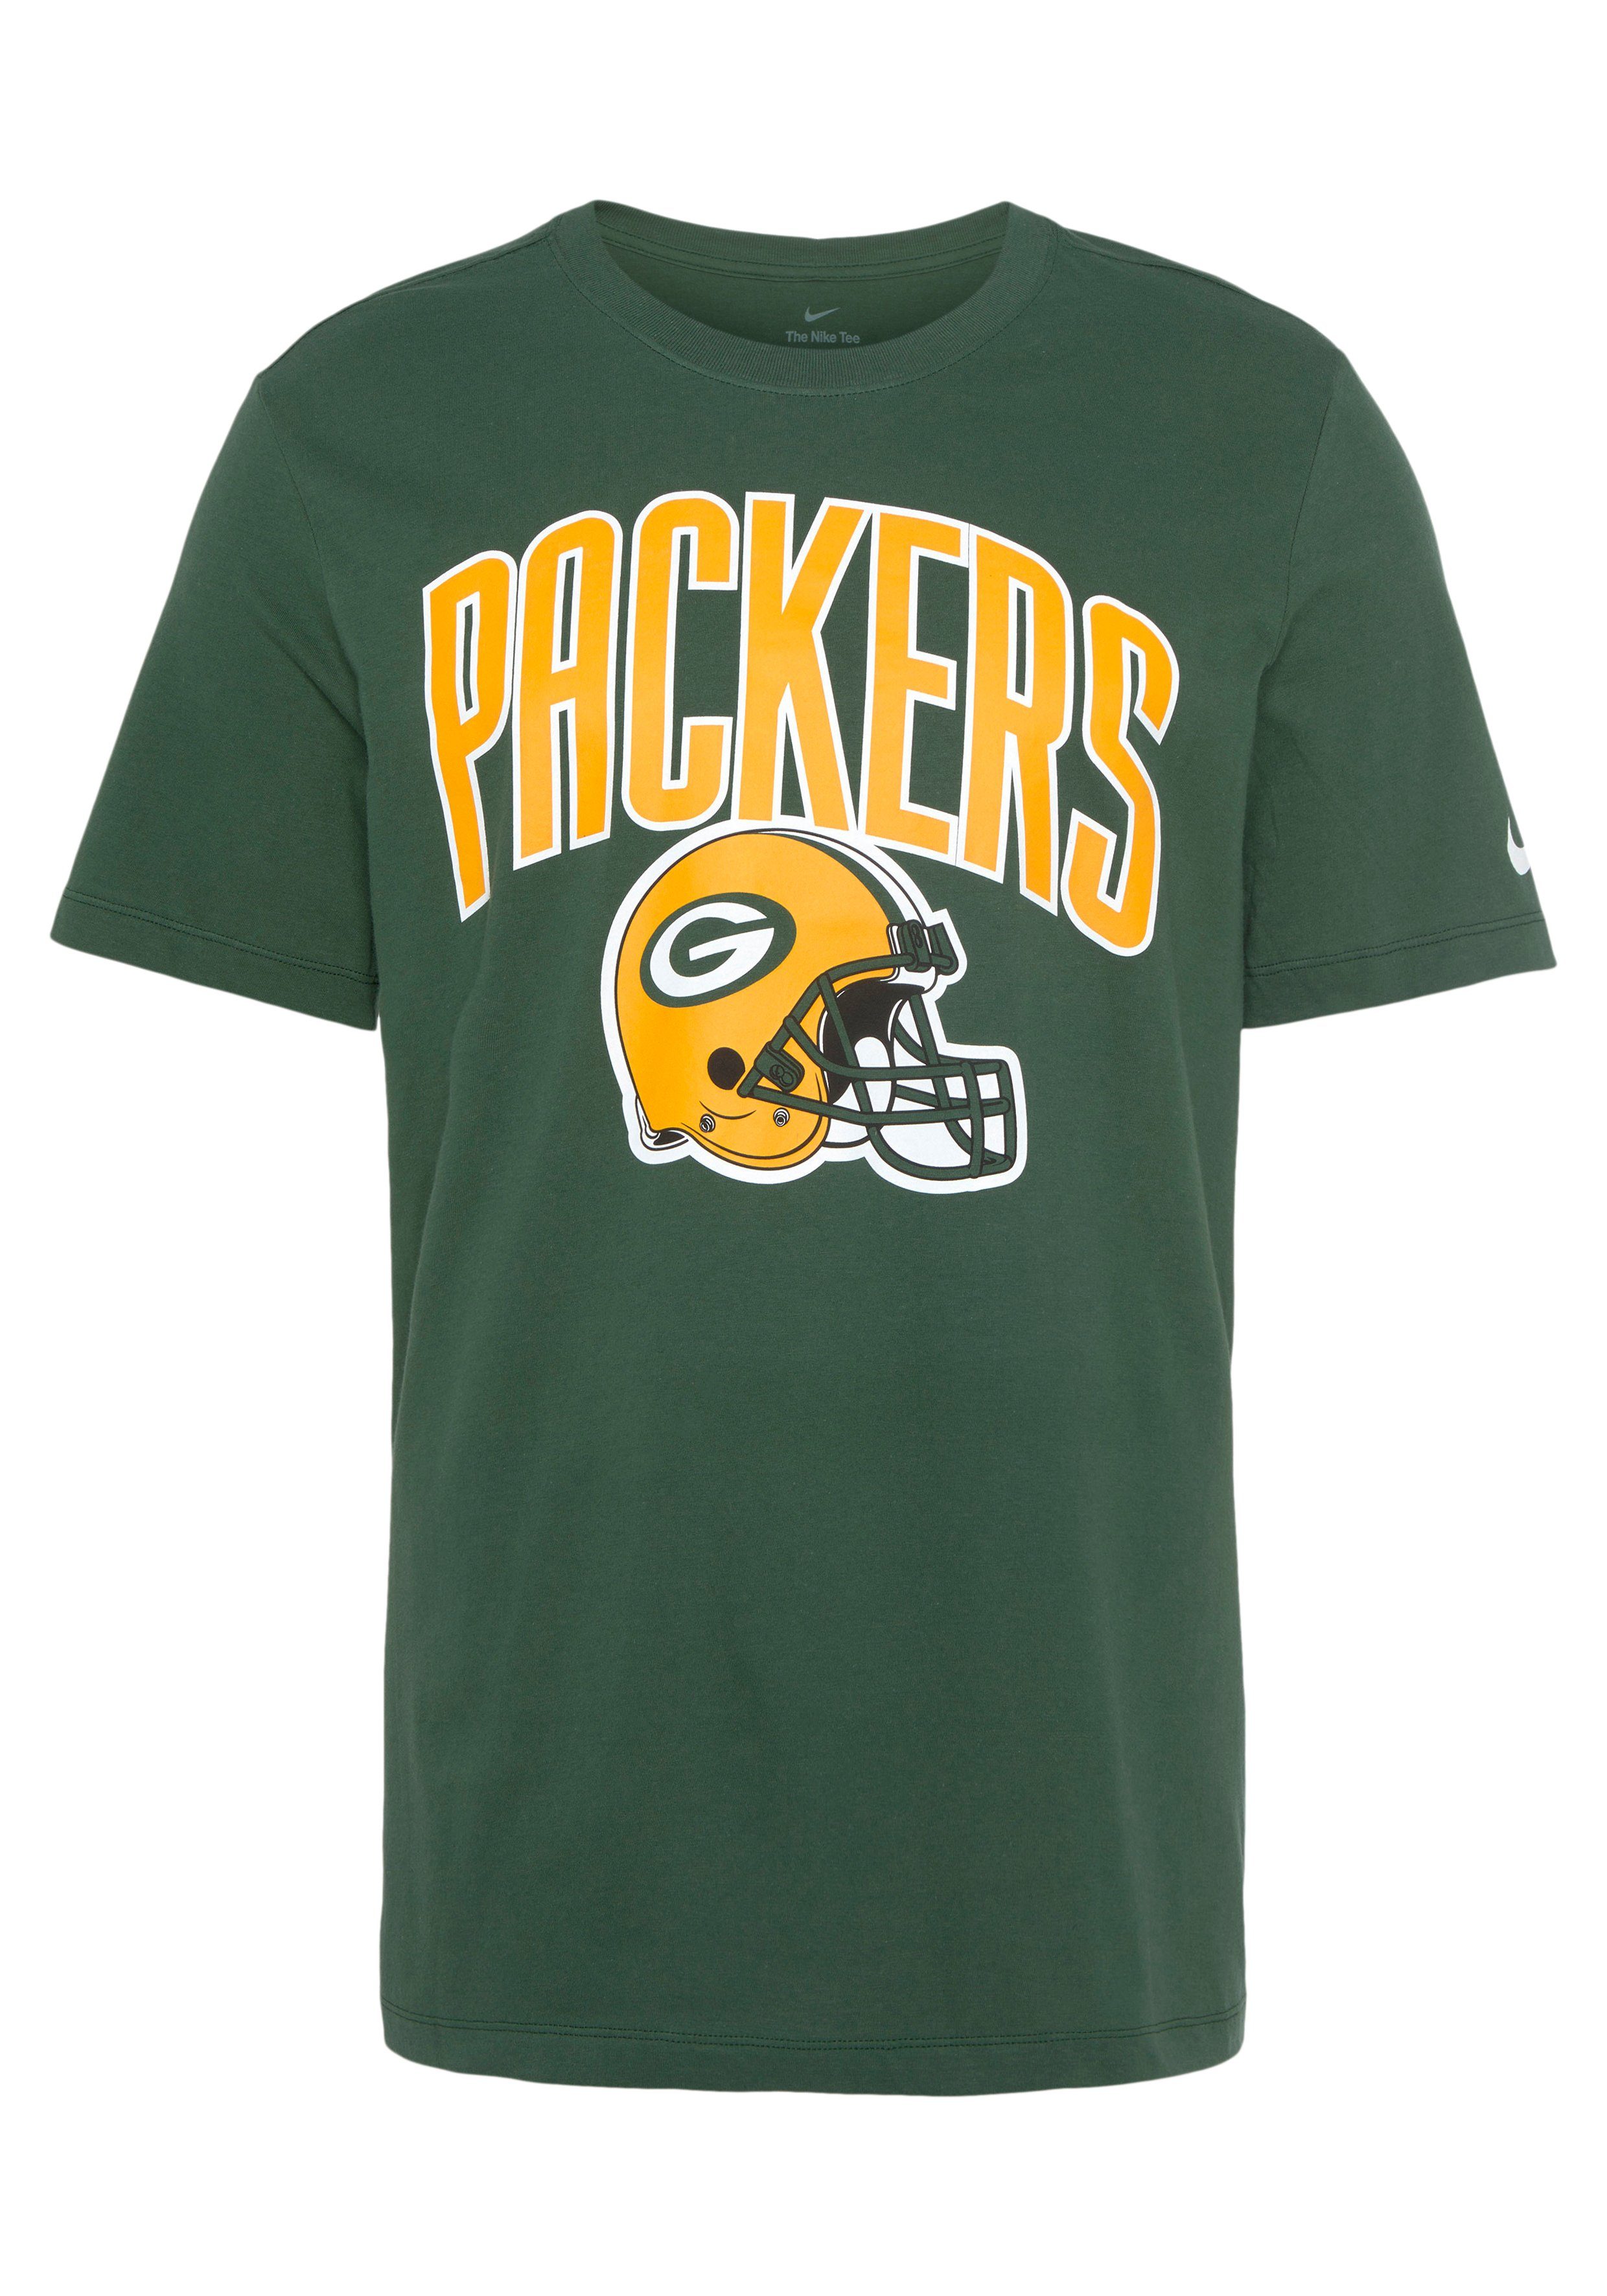 ESSENTIAL NIKE GREEN TEAM Nike PACKERS T-SHIRT T-Shirt NFL BAY